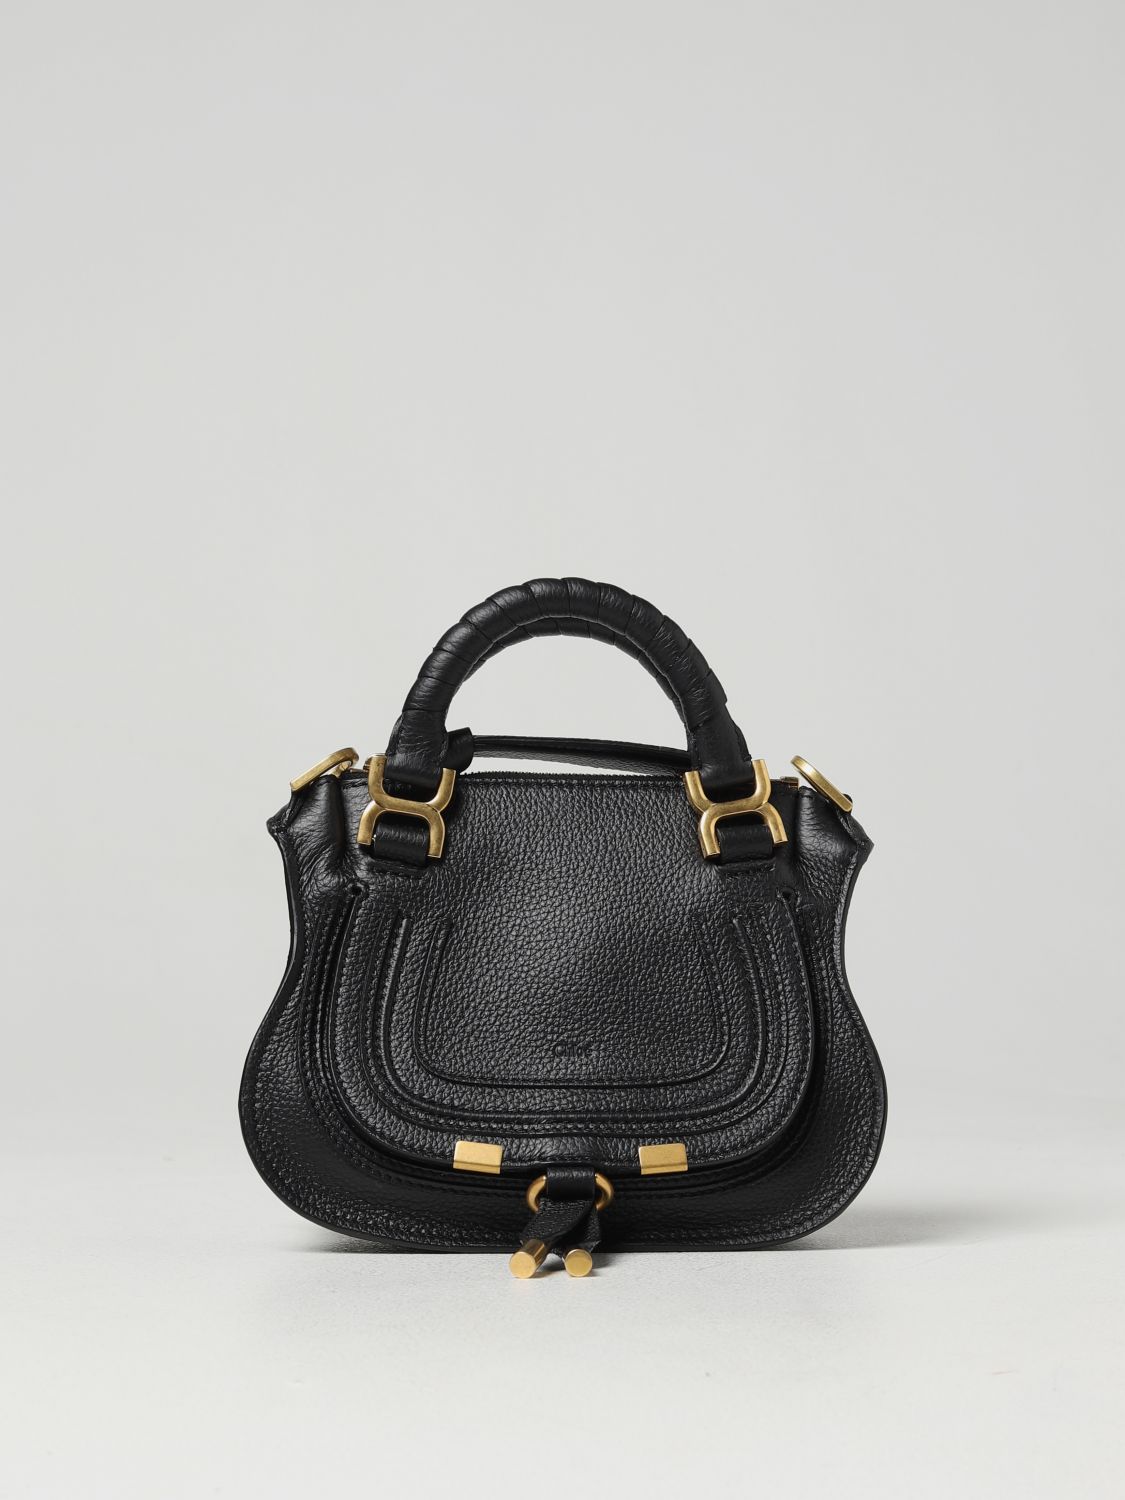 Handbag Woman In Black